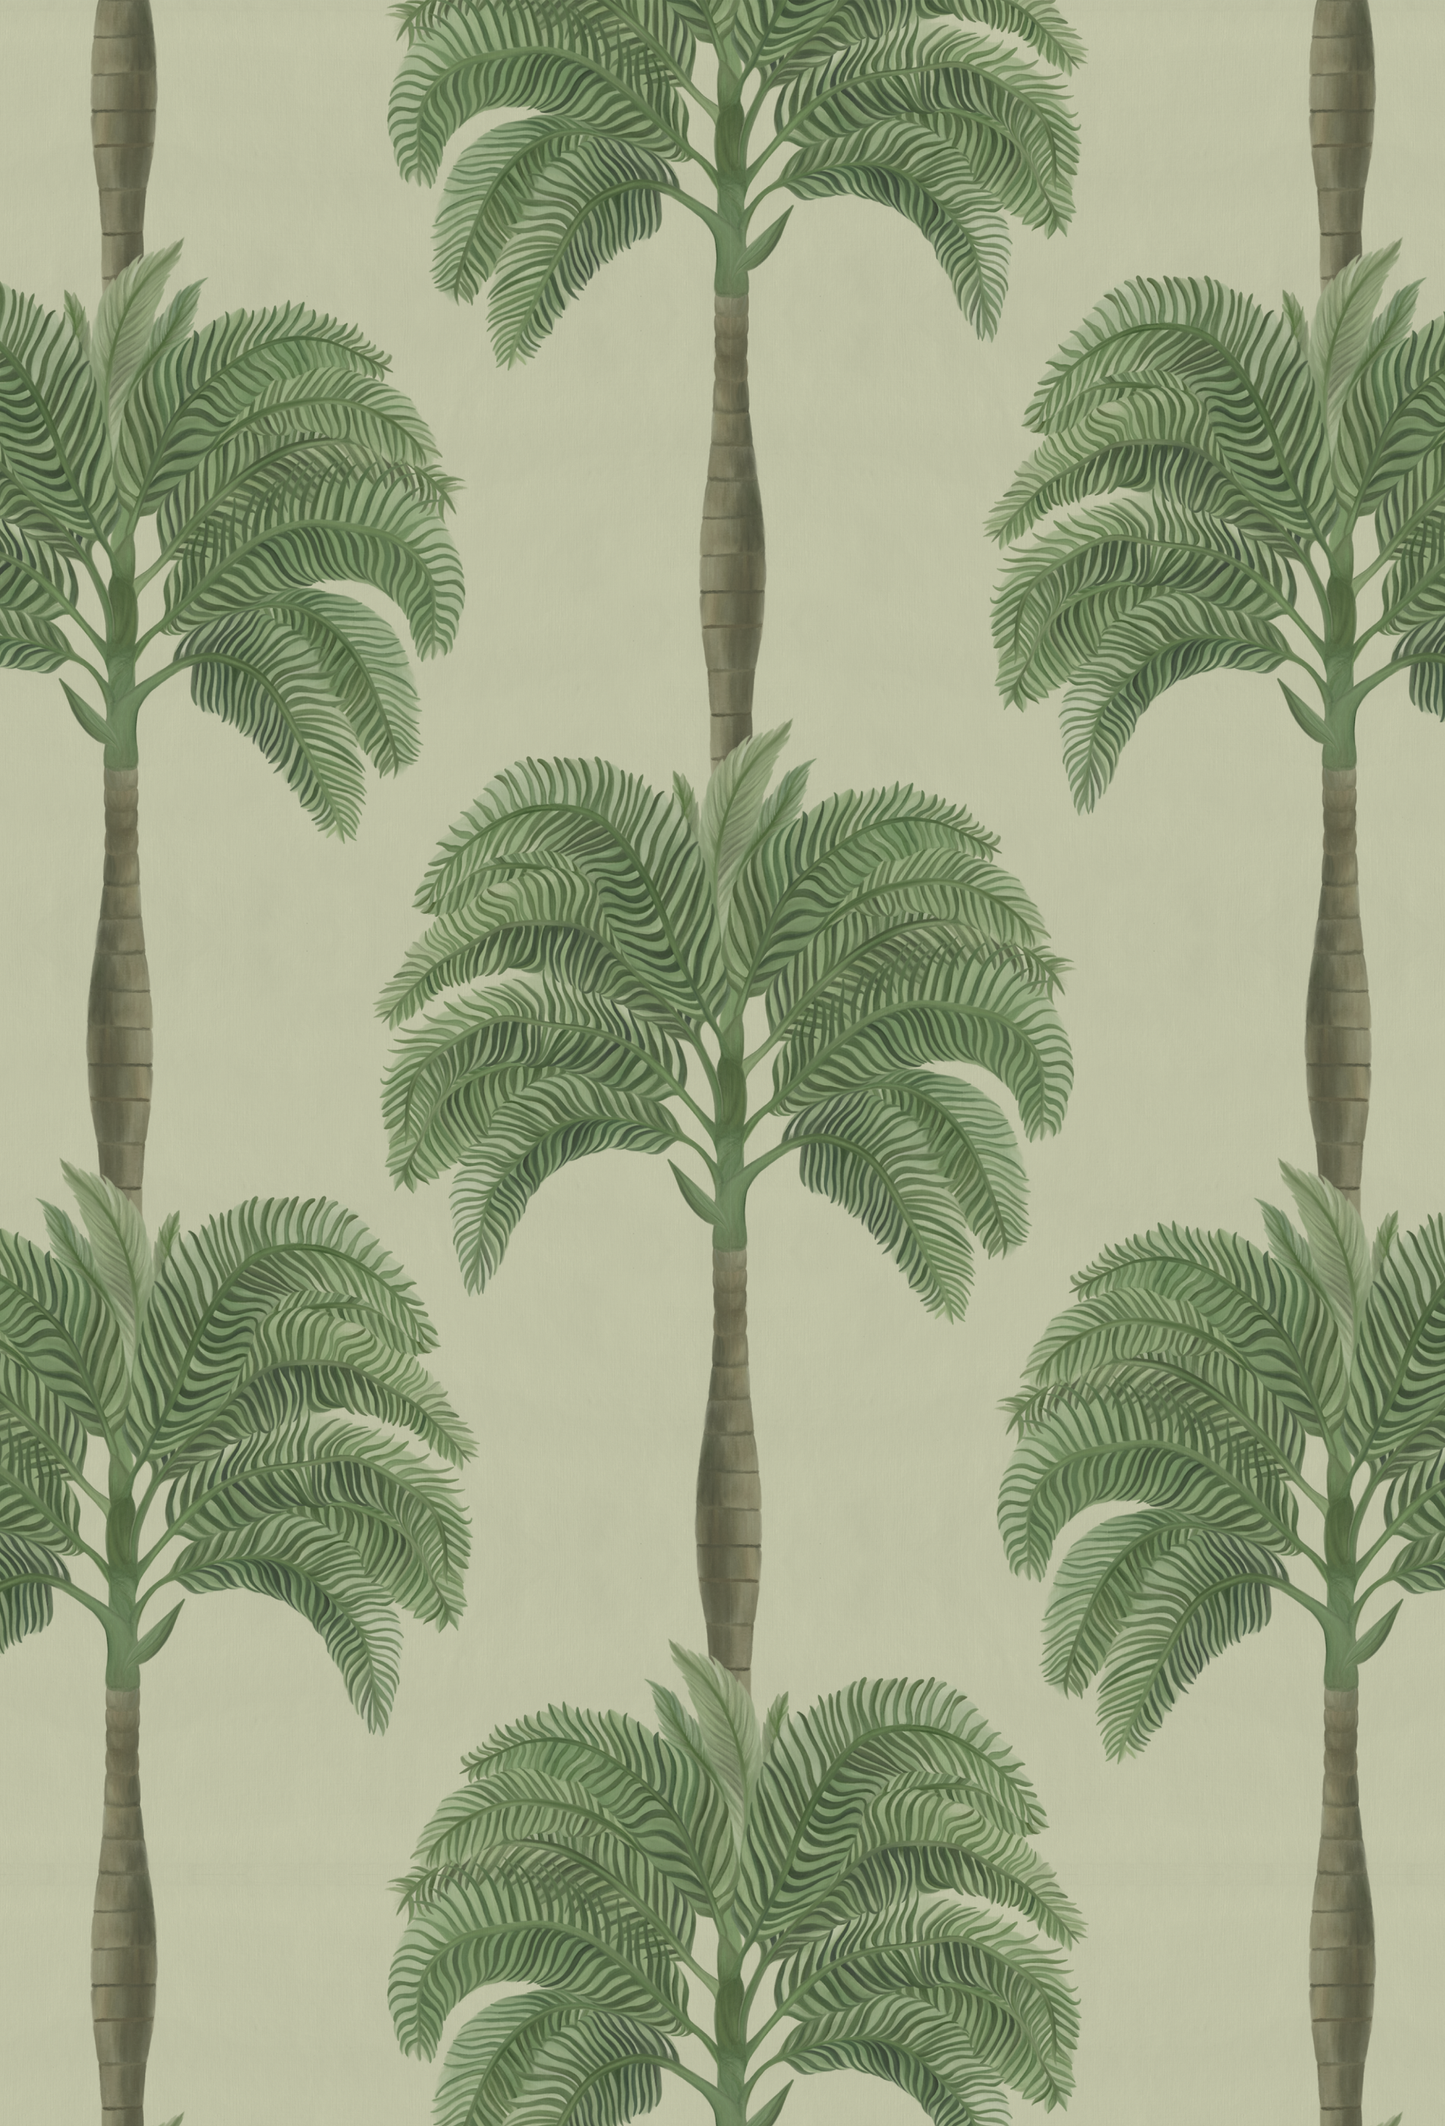 Striped green palm tree 'Palma' wallpaper in Sand by Deus ex Gardenia.